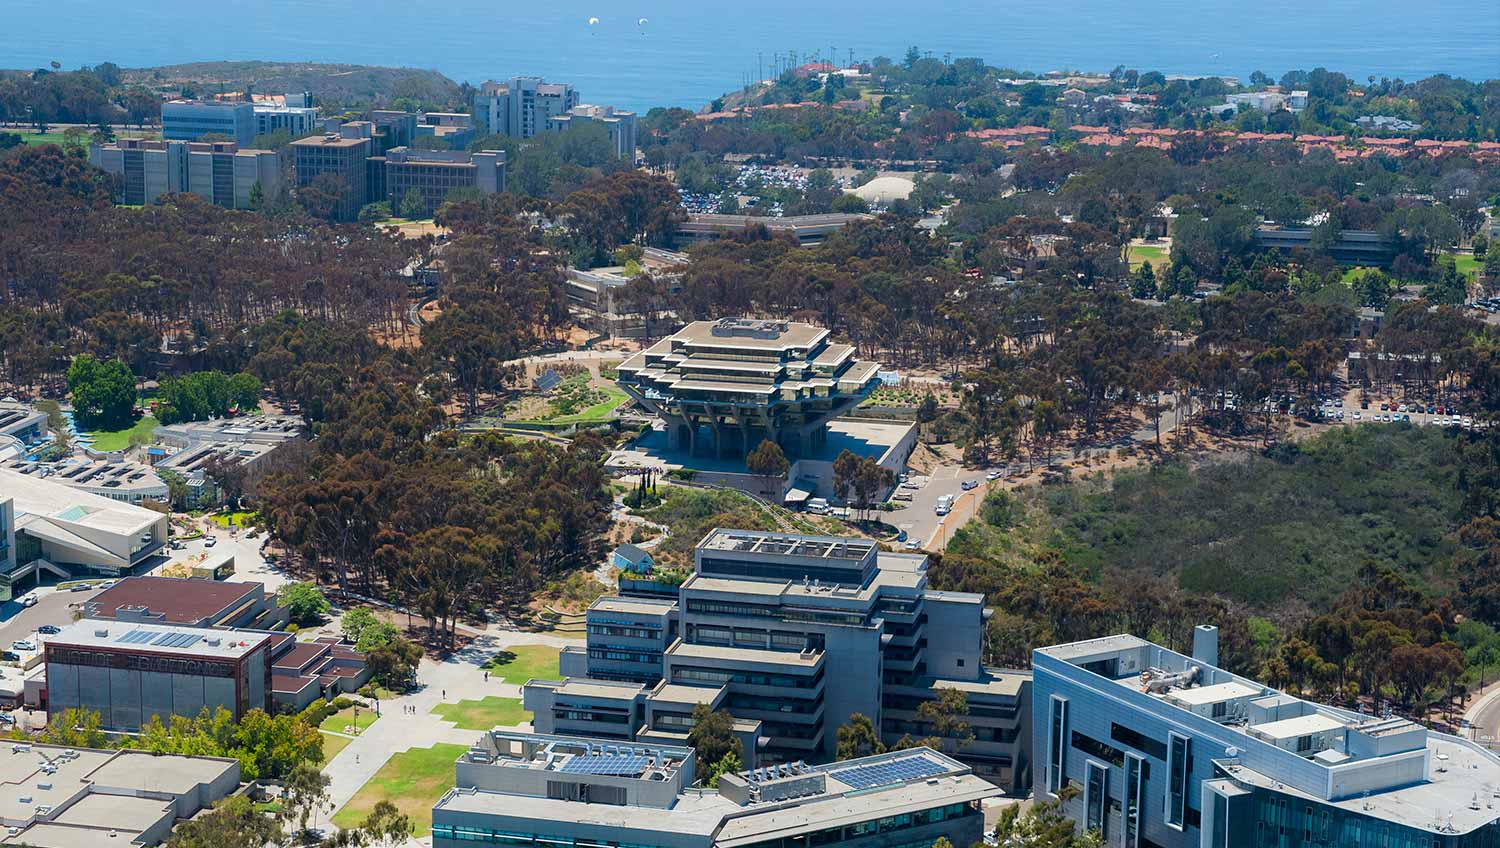 Image: The University of California San Diego